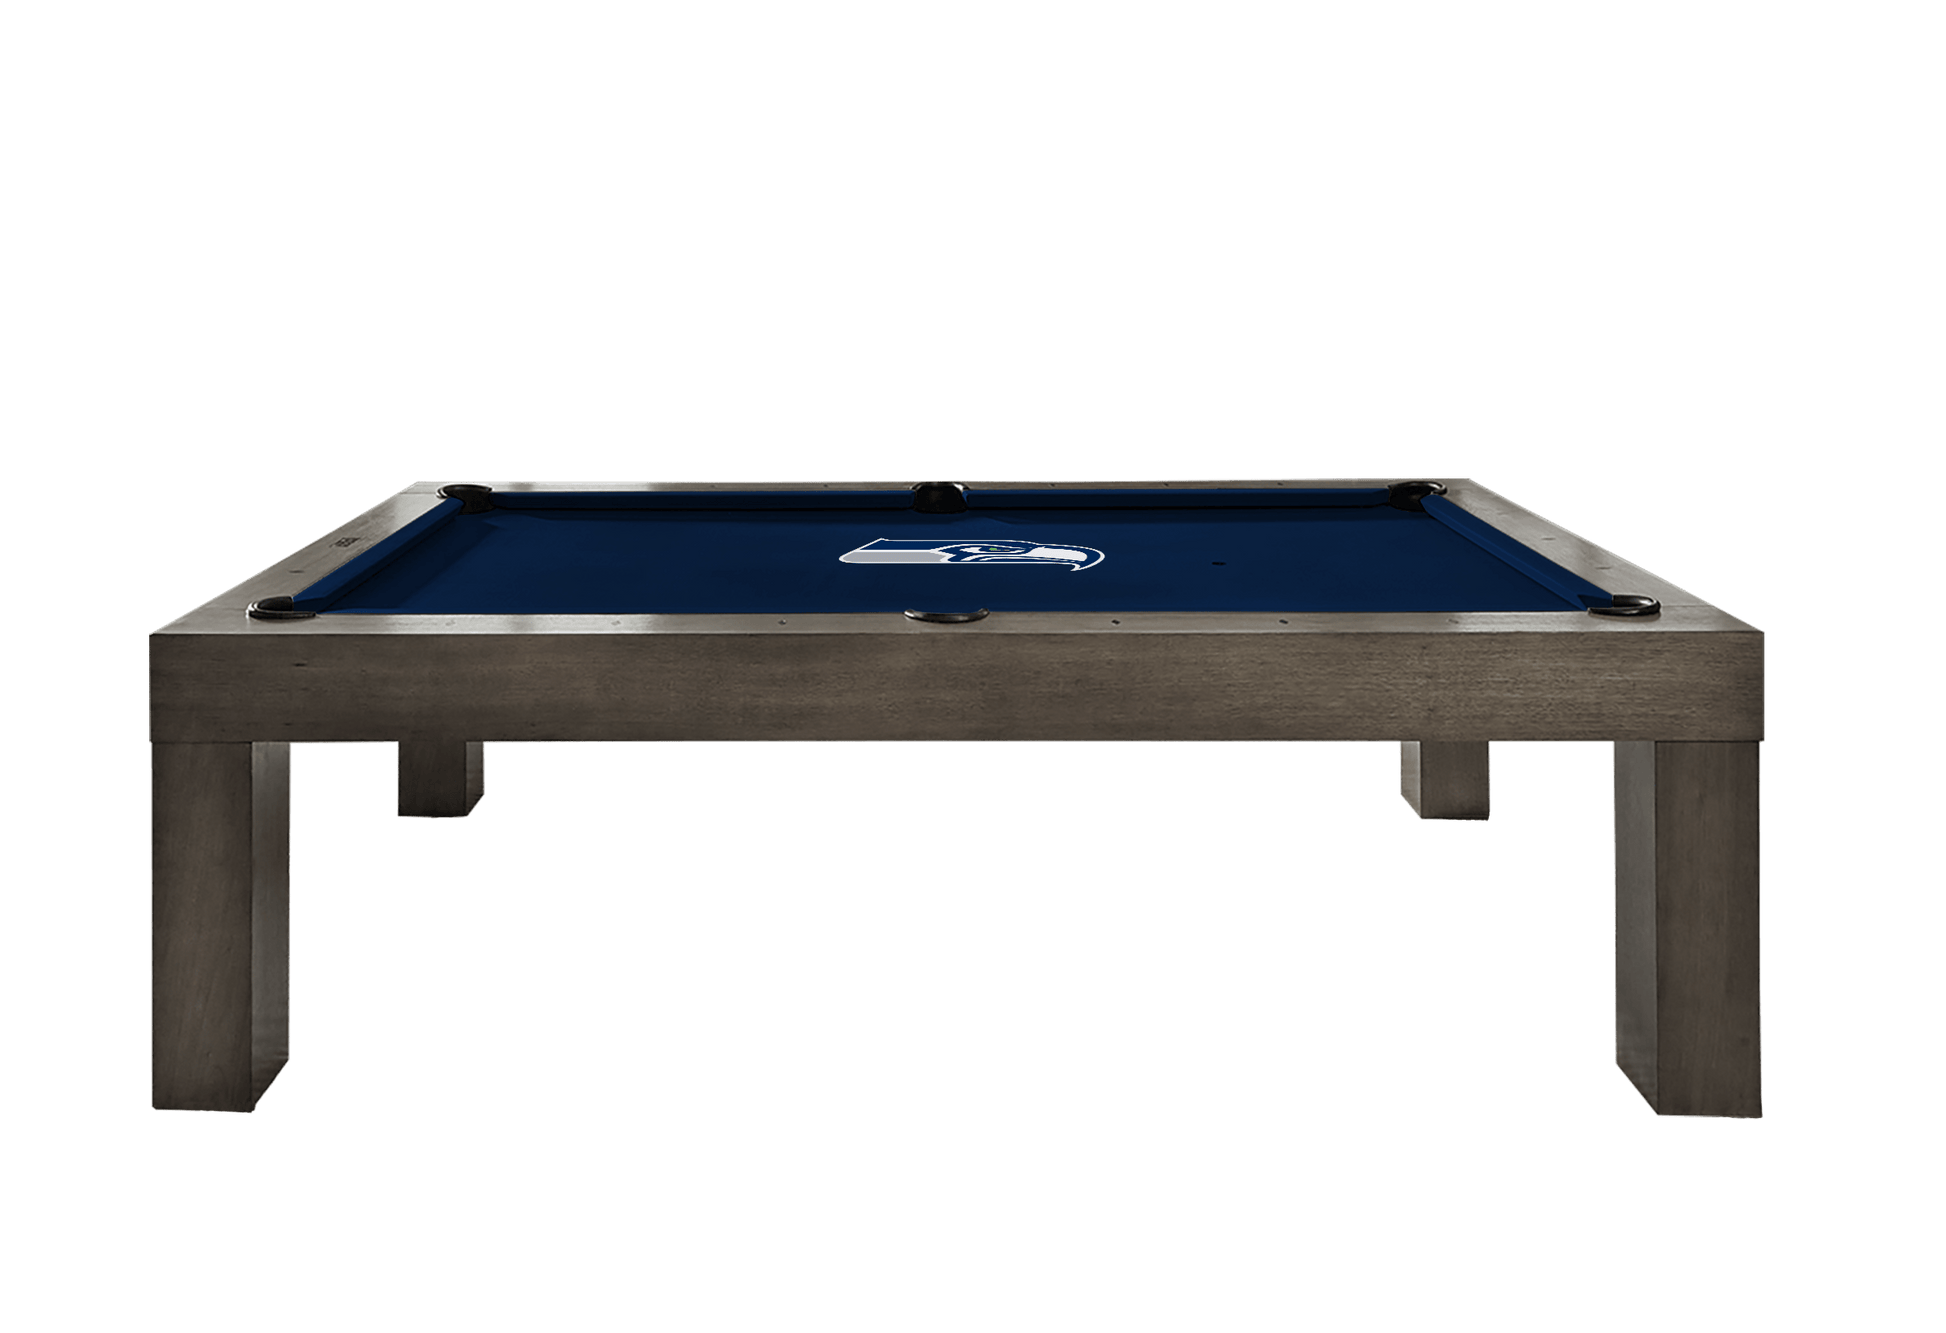 Seattle Seahawks Premium Pool Table Bundle - Charcoal Pool Bundle Home Arcade Games   